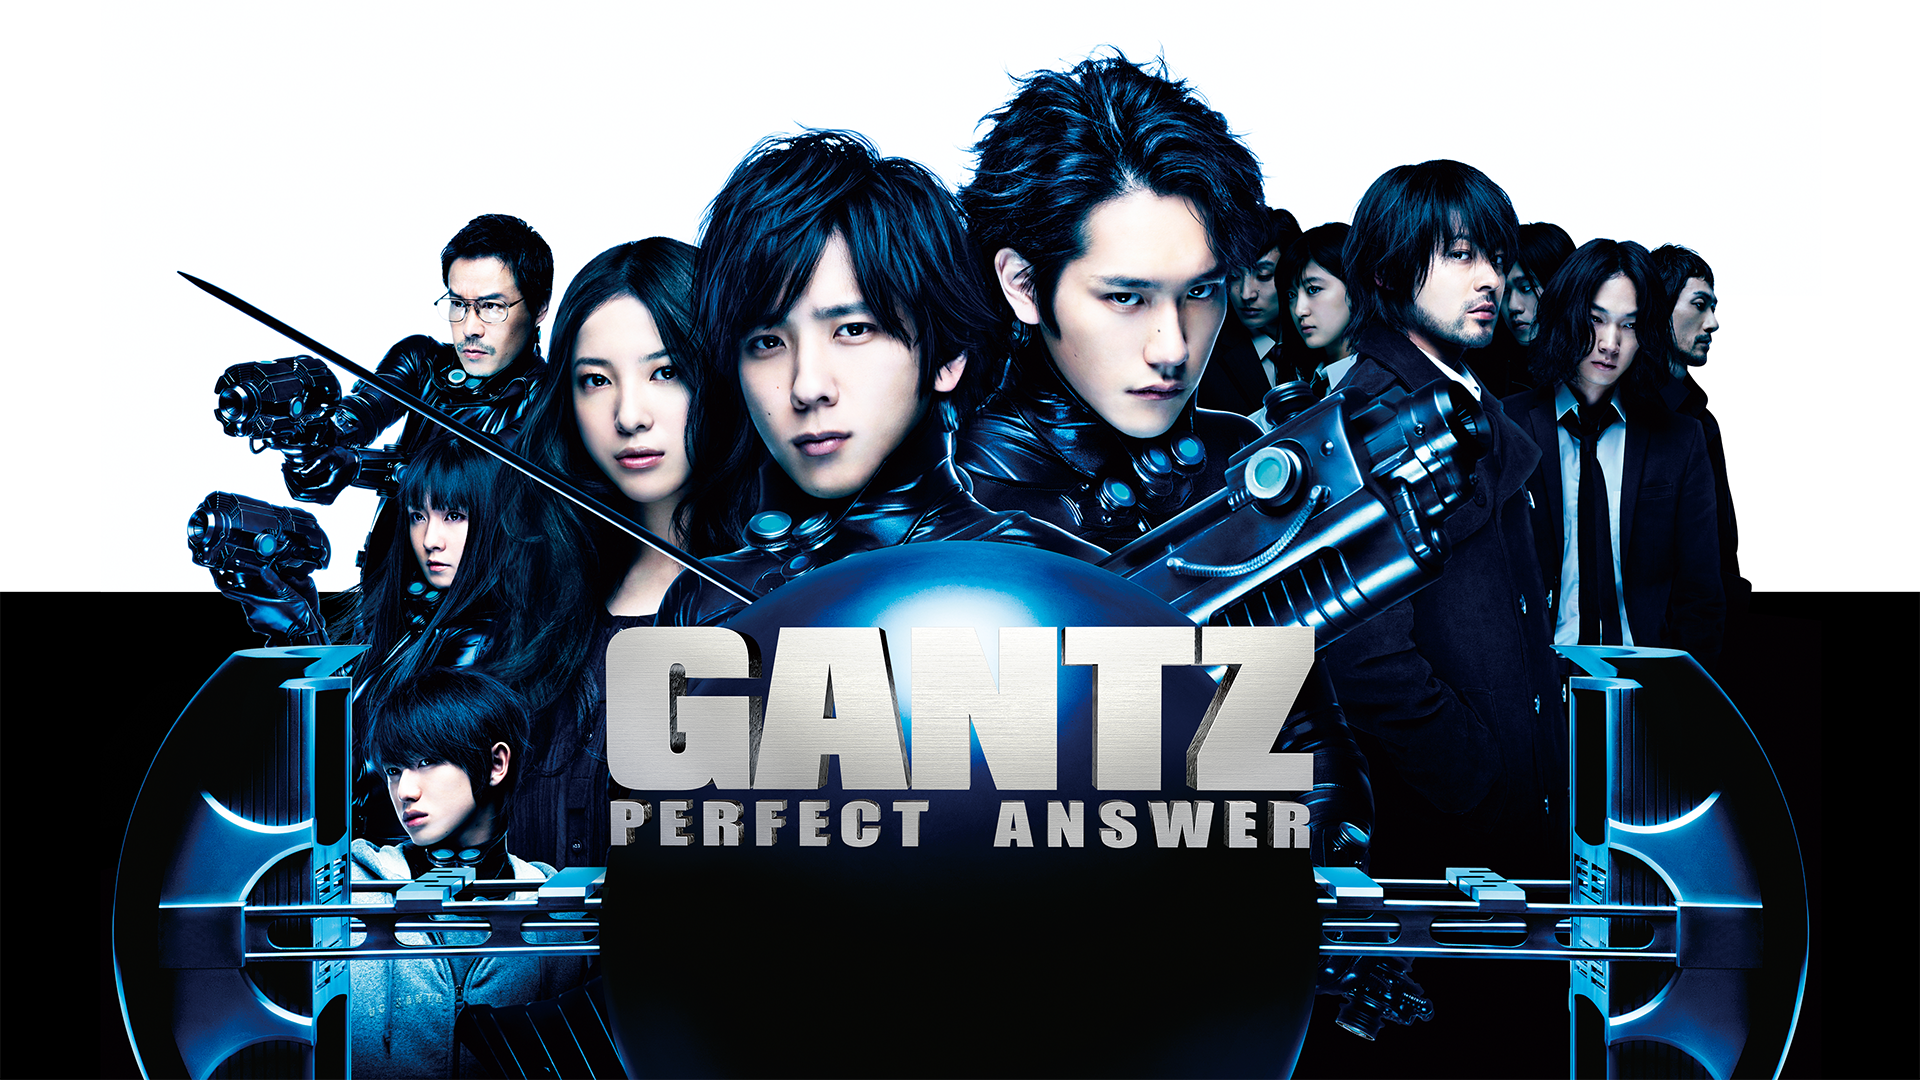 GANTZ PERFECT ANSWER(邦画 / 2011) - 動画配信 | U-NEXT 31日間無料